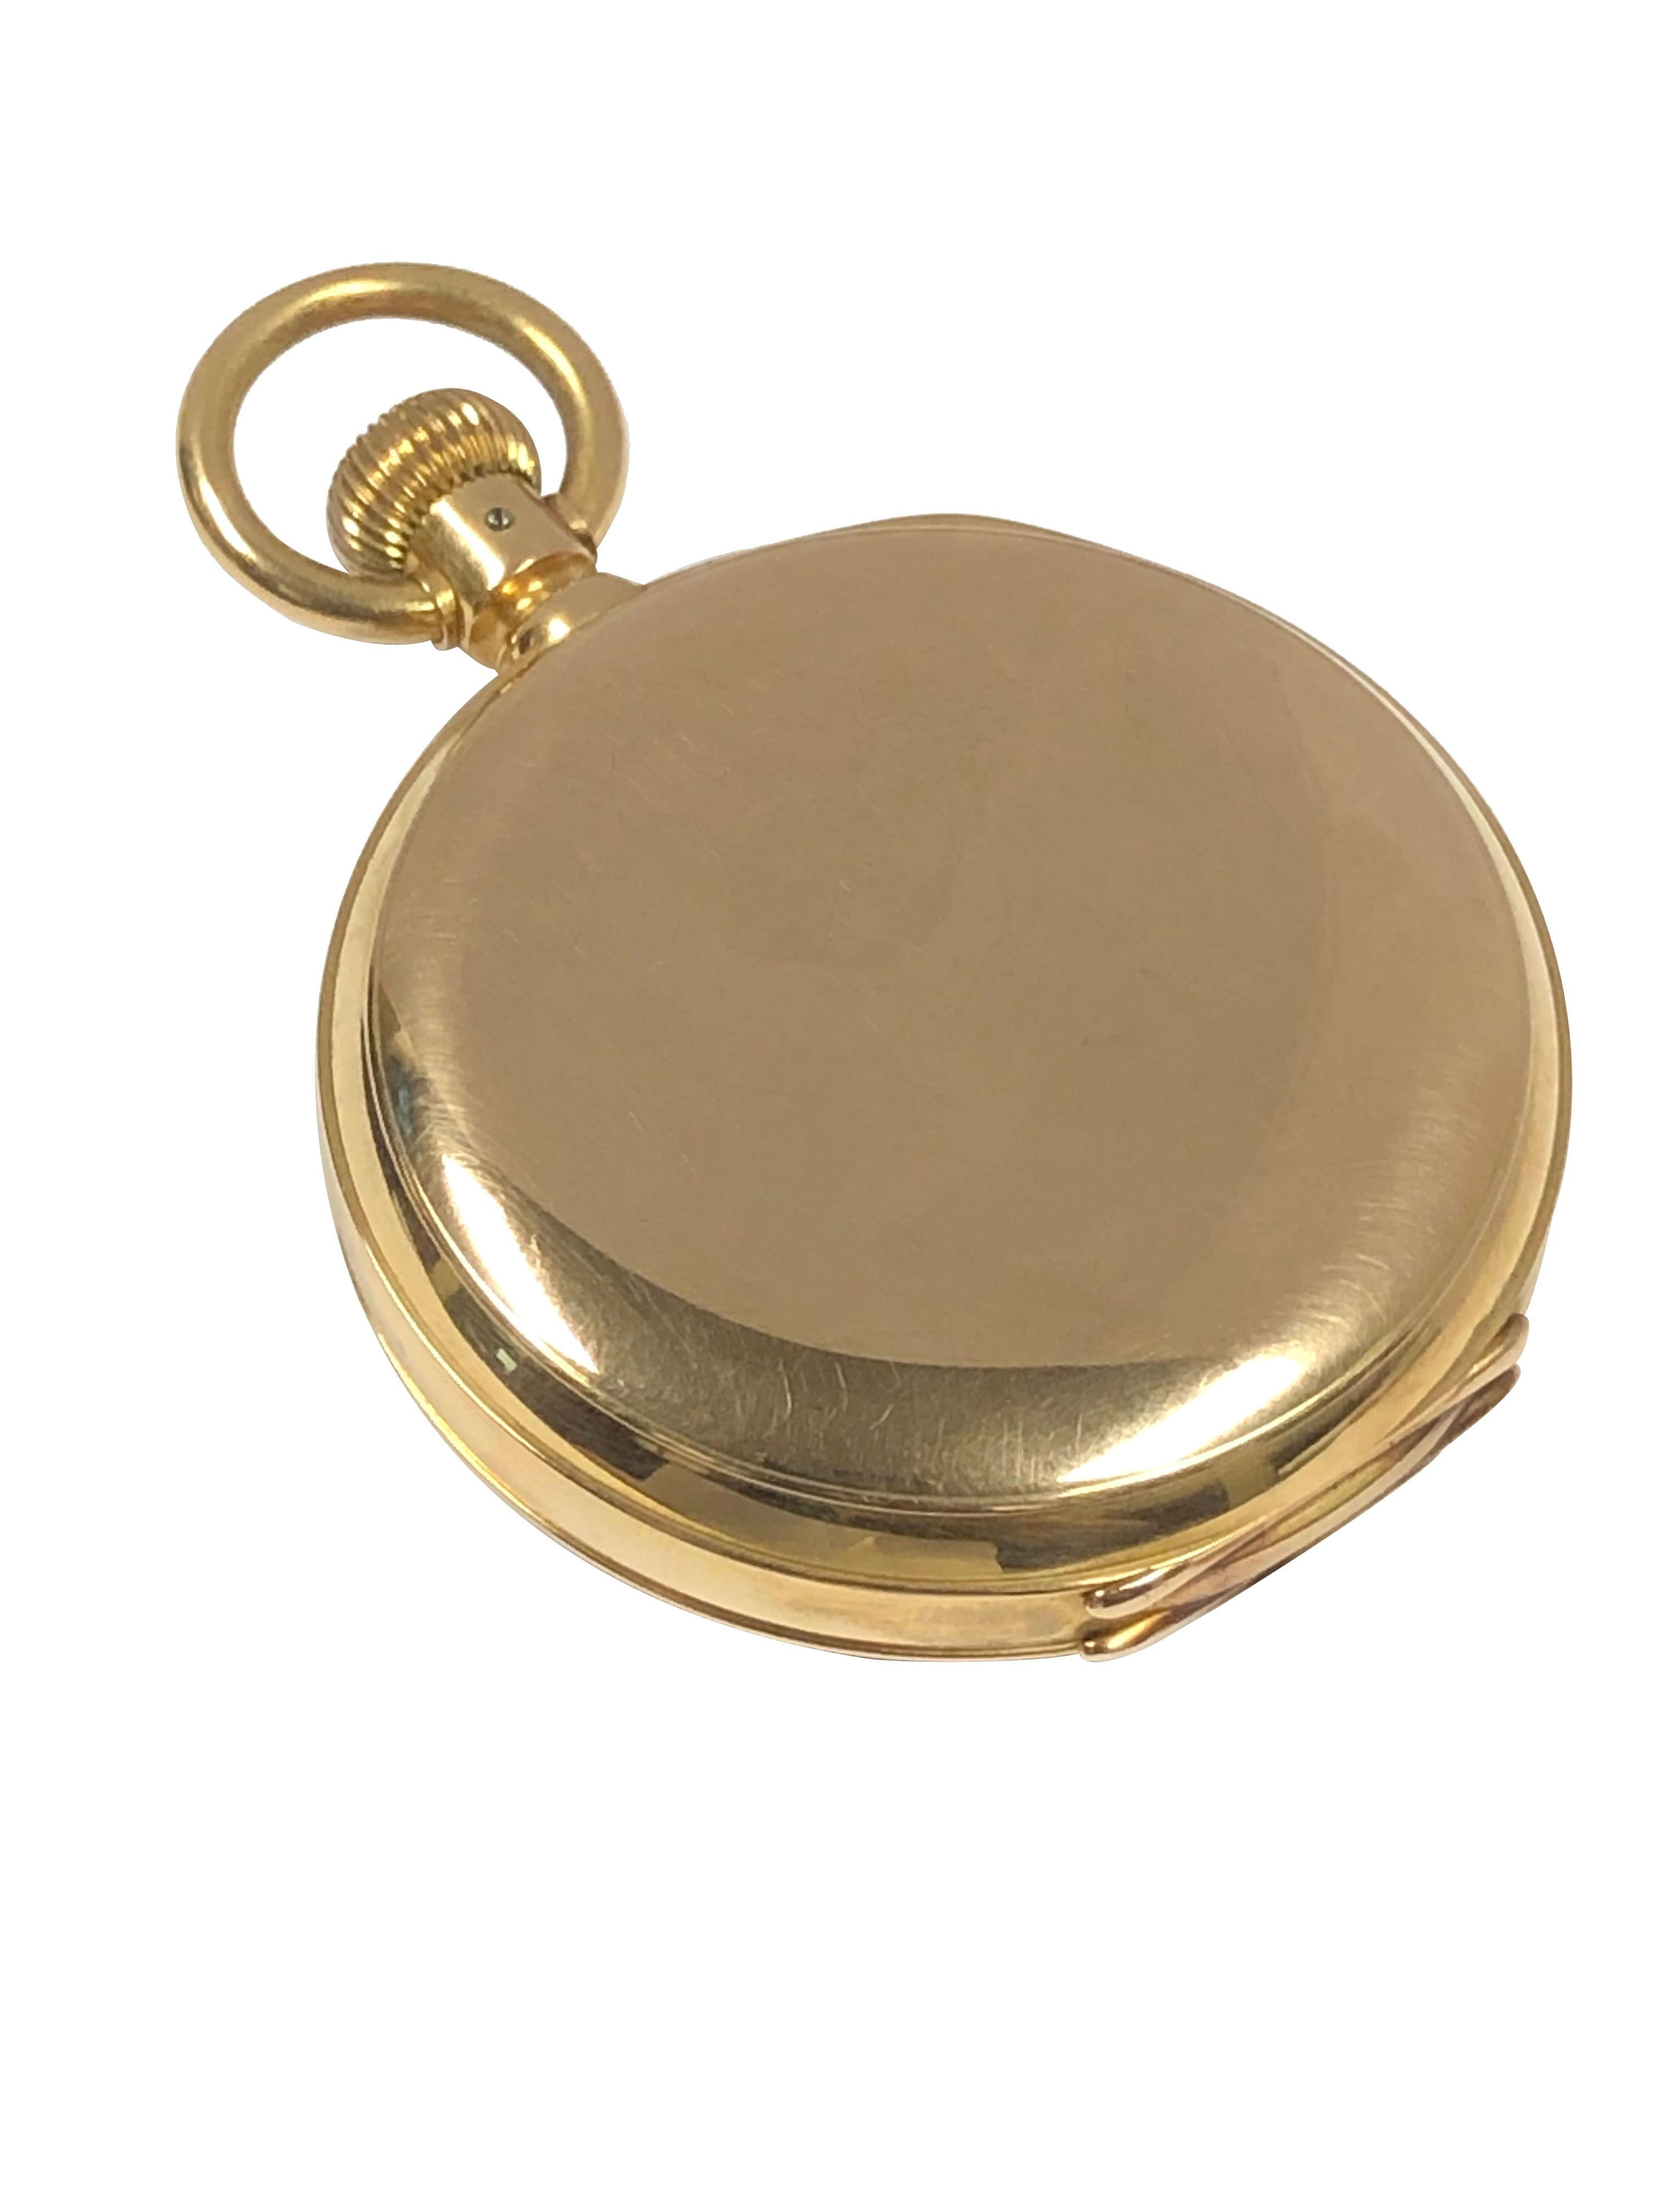 Vacheron Constantin Vintage Large 18k Gold cased Pocket Watch 1890s 2